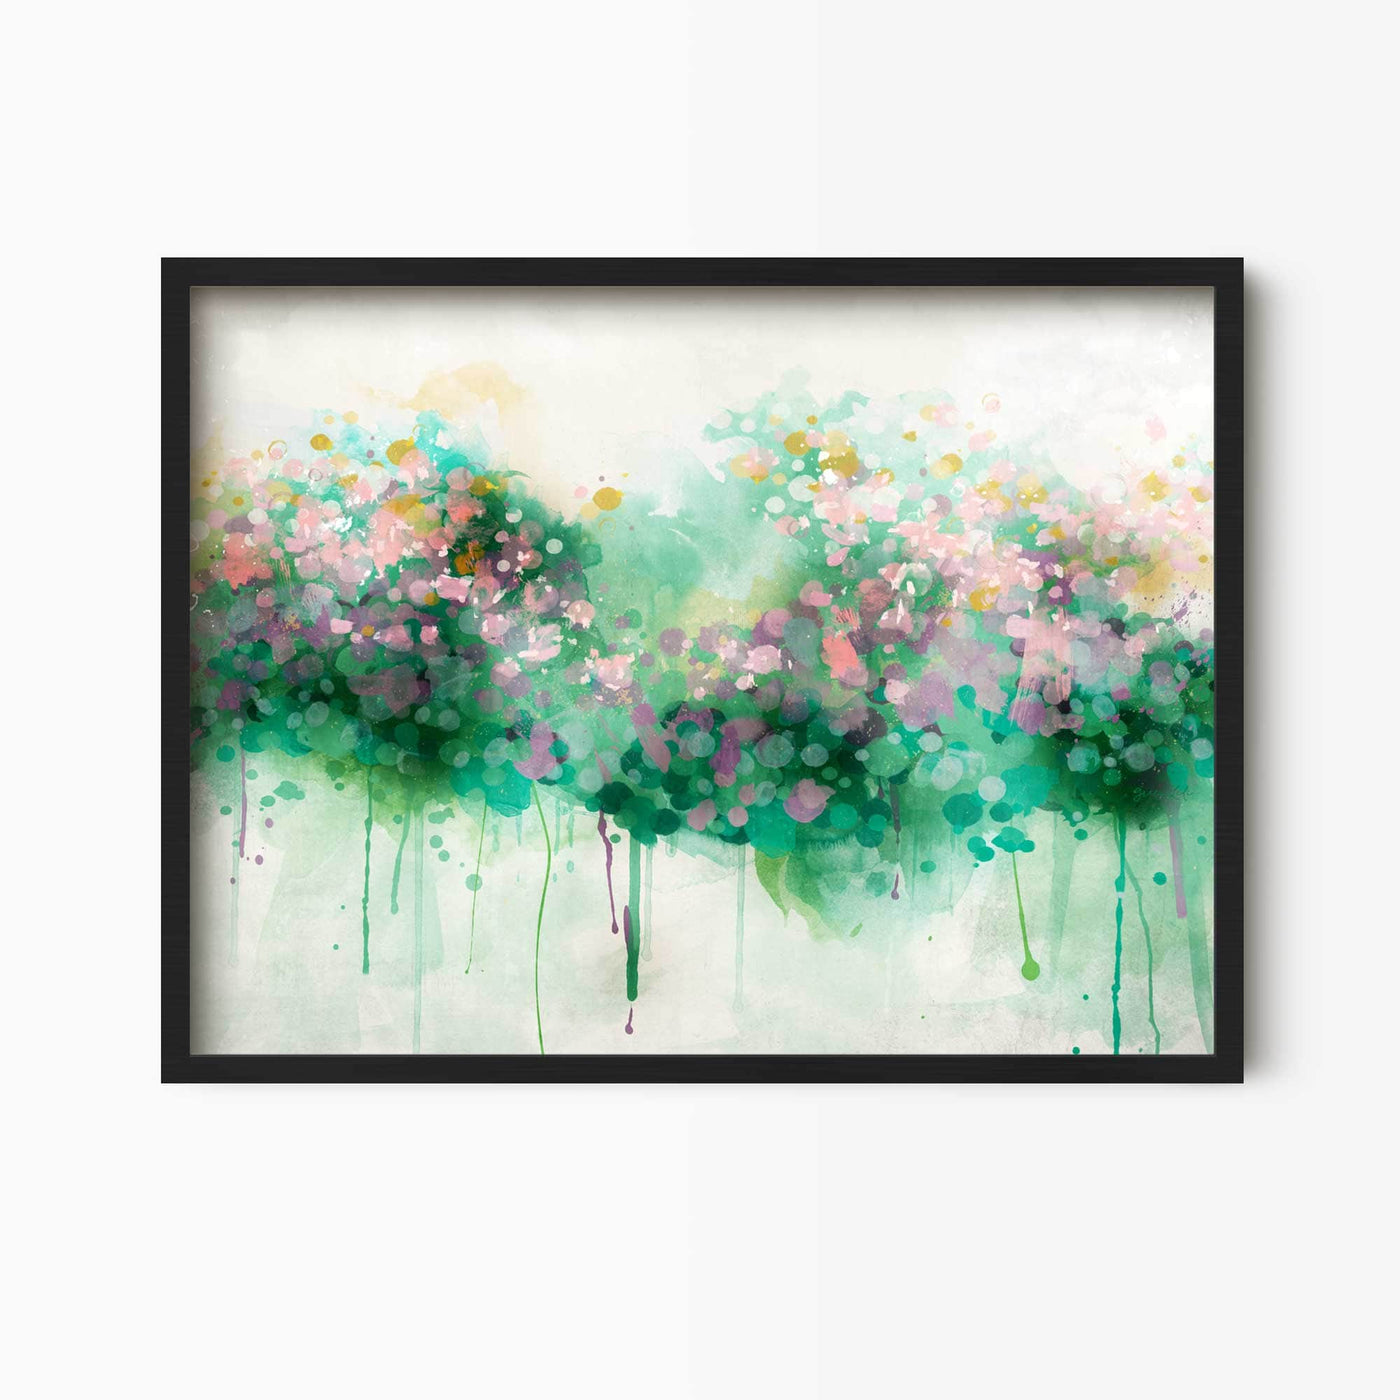 Green Lili 30x40cm (12x16") / Black Frame Spring Bloom Abstract Floral Art Print